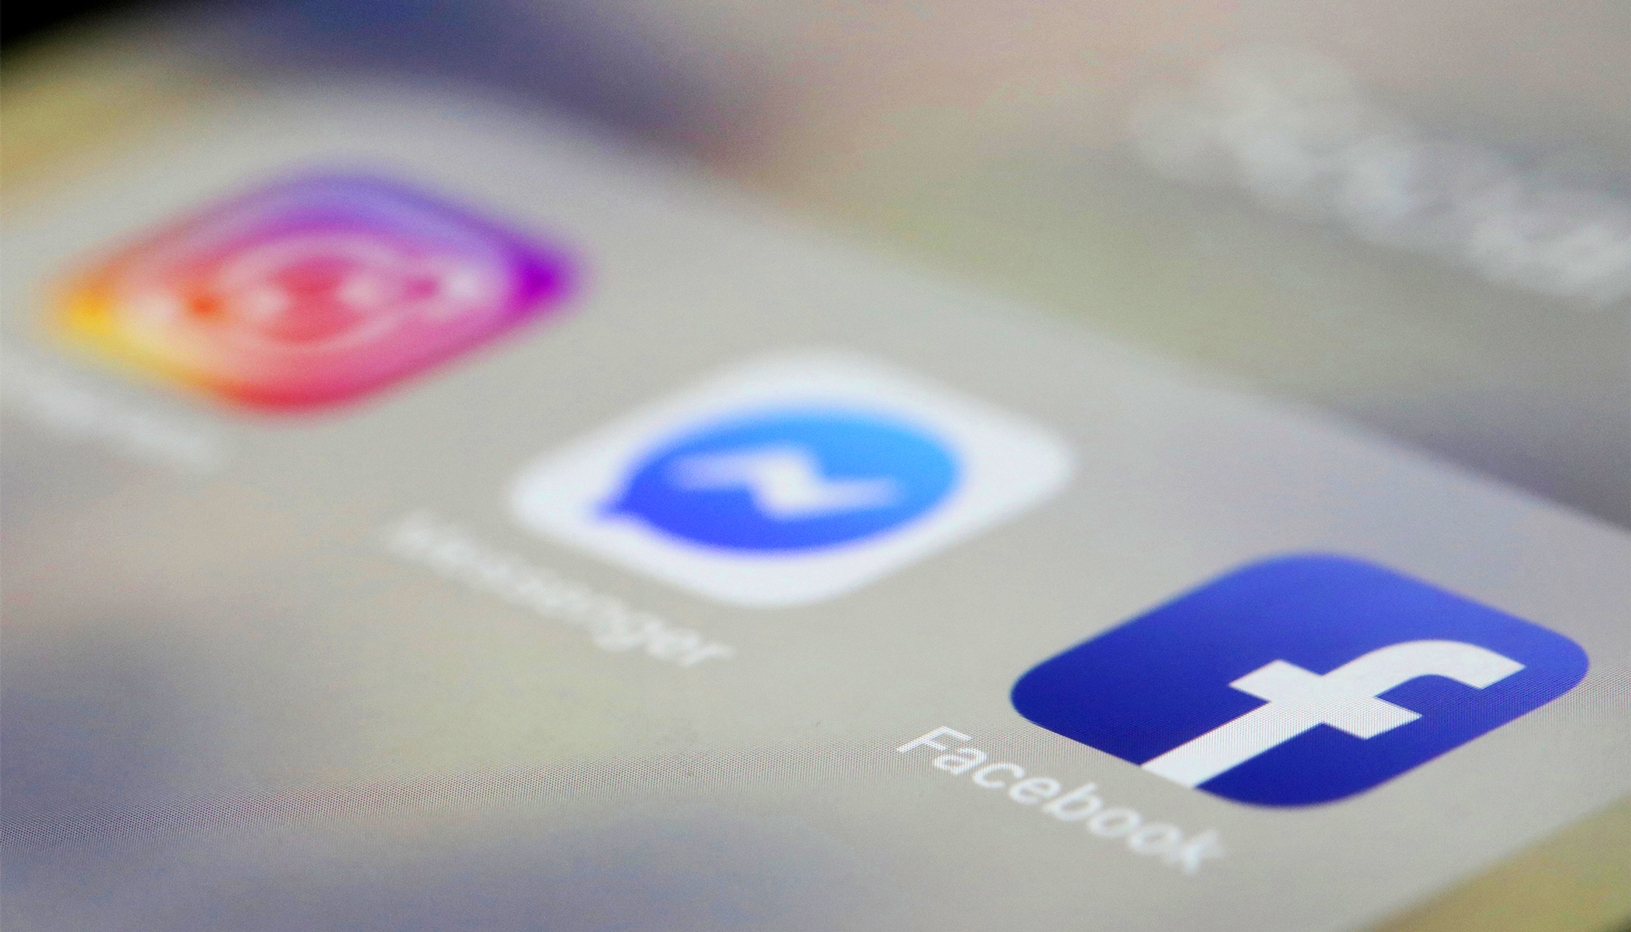 social media apps seen on a phone screen